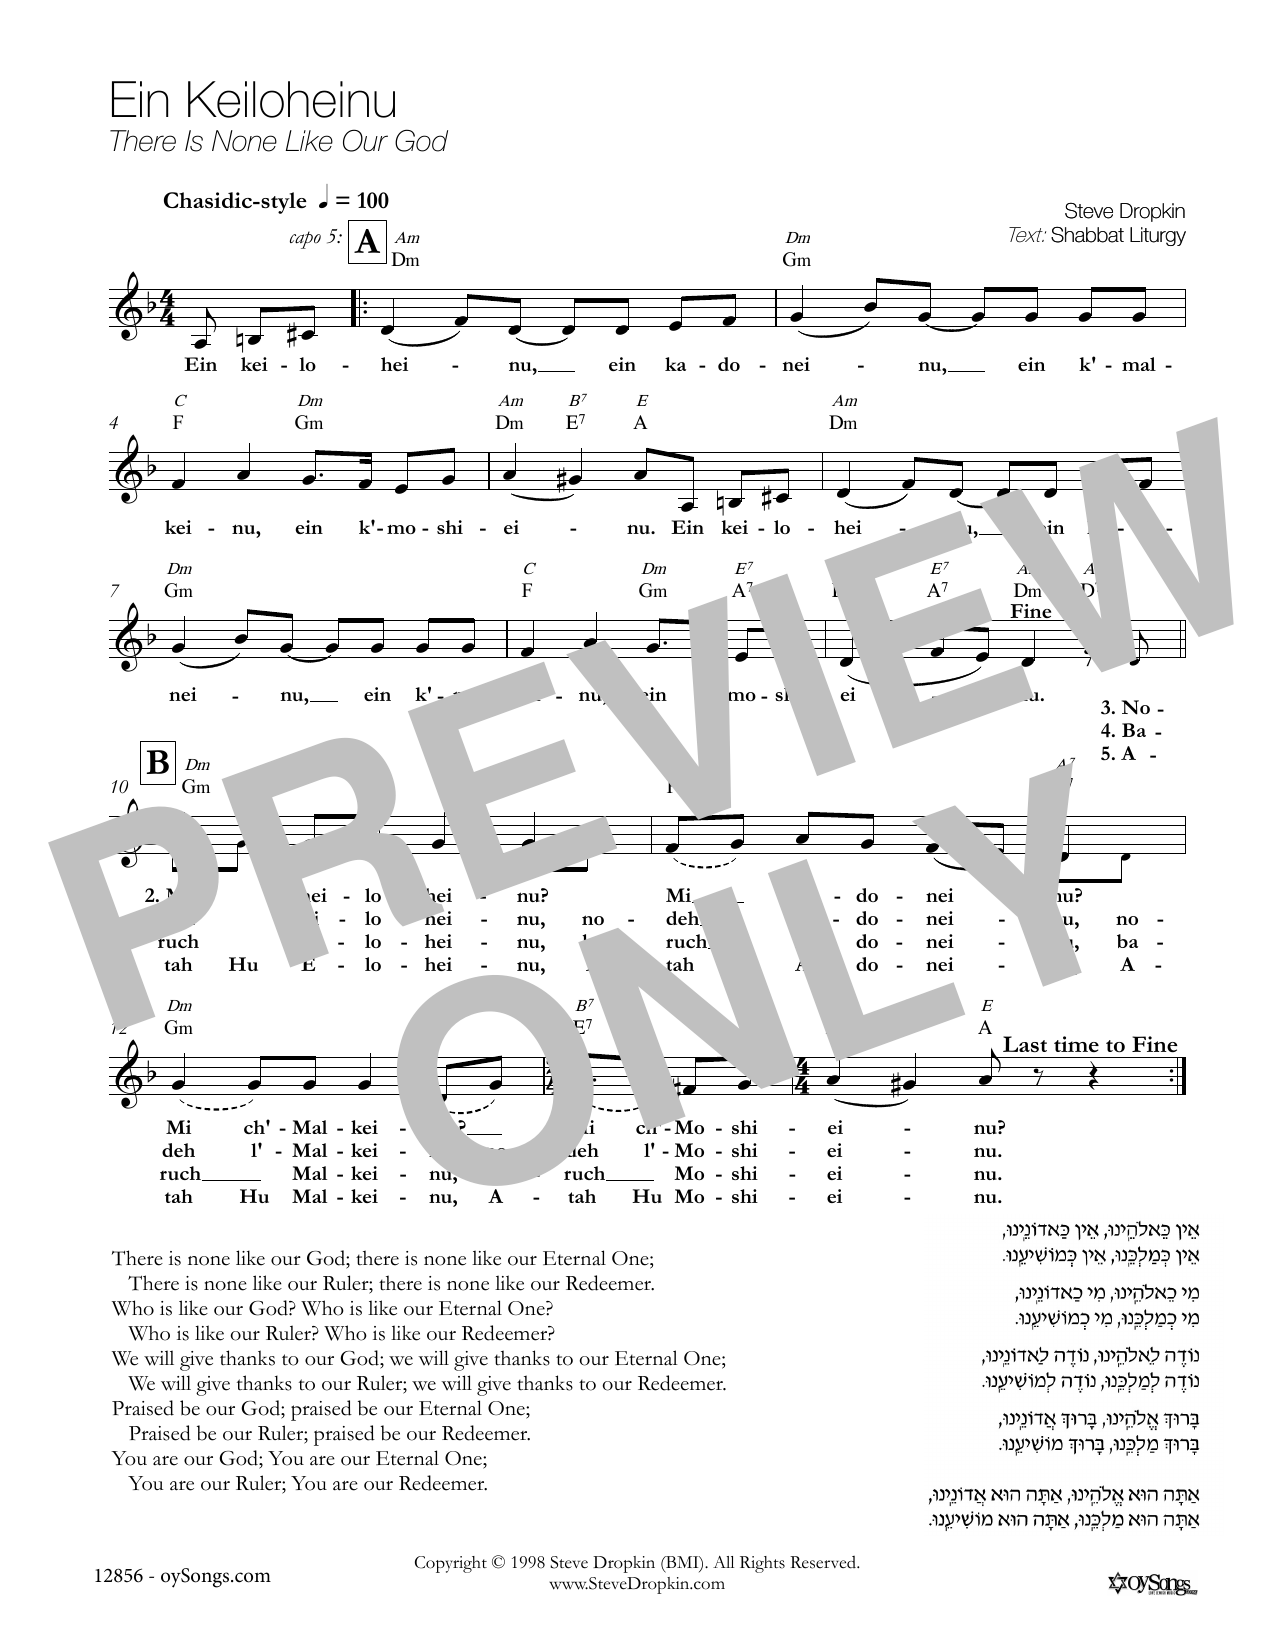 Steve Dropkin Ein Keiloheinu Sheet Music Notes & Chords for Melody Line, Lyrics & Chords - Download or Print PDF